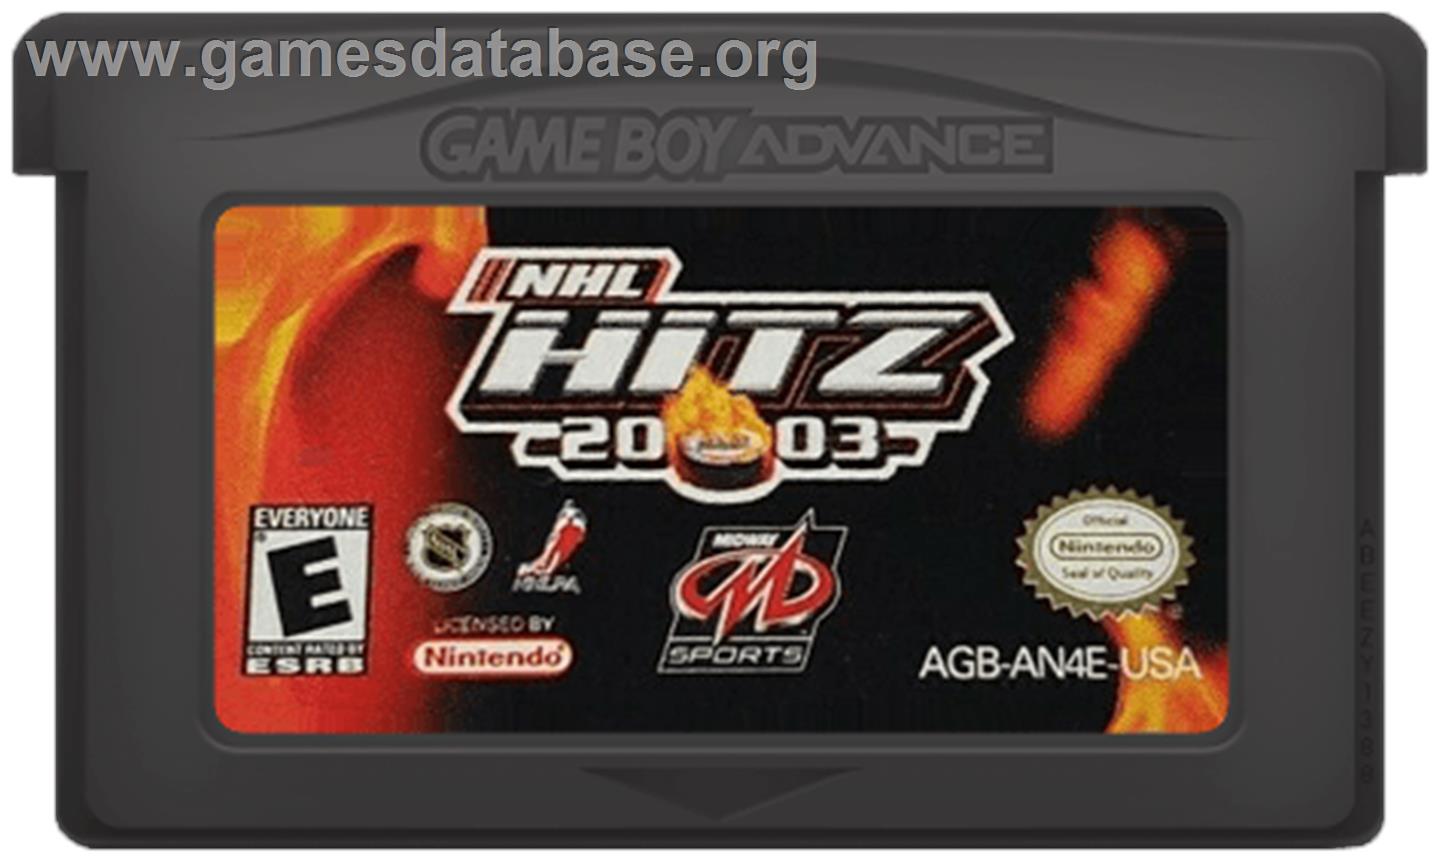 NHL Hitz 20-03 - Nintendo Game Boy Advance - Artwork - Cartridge